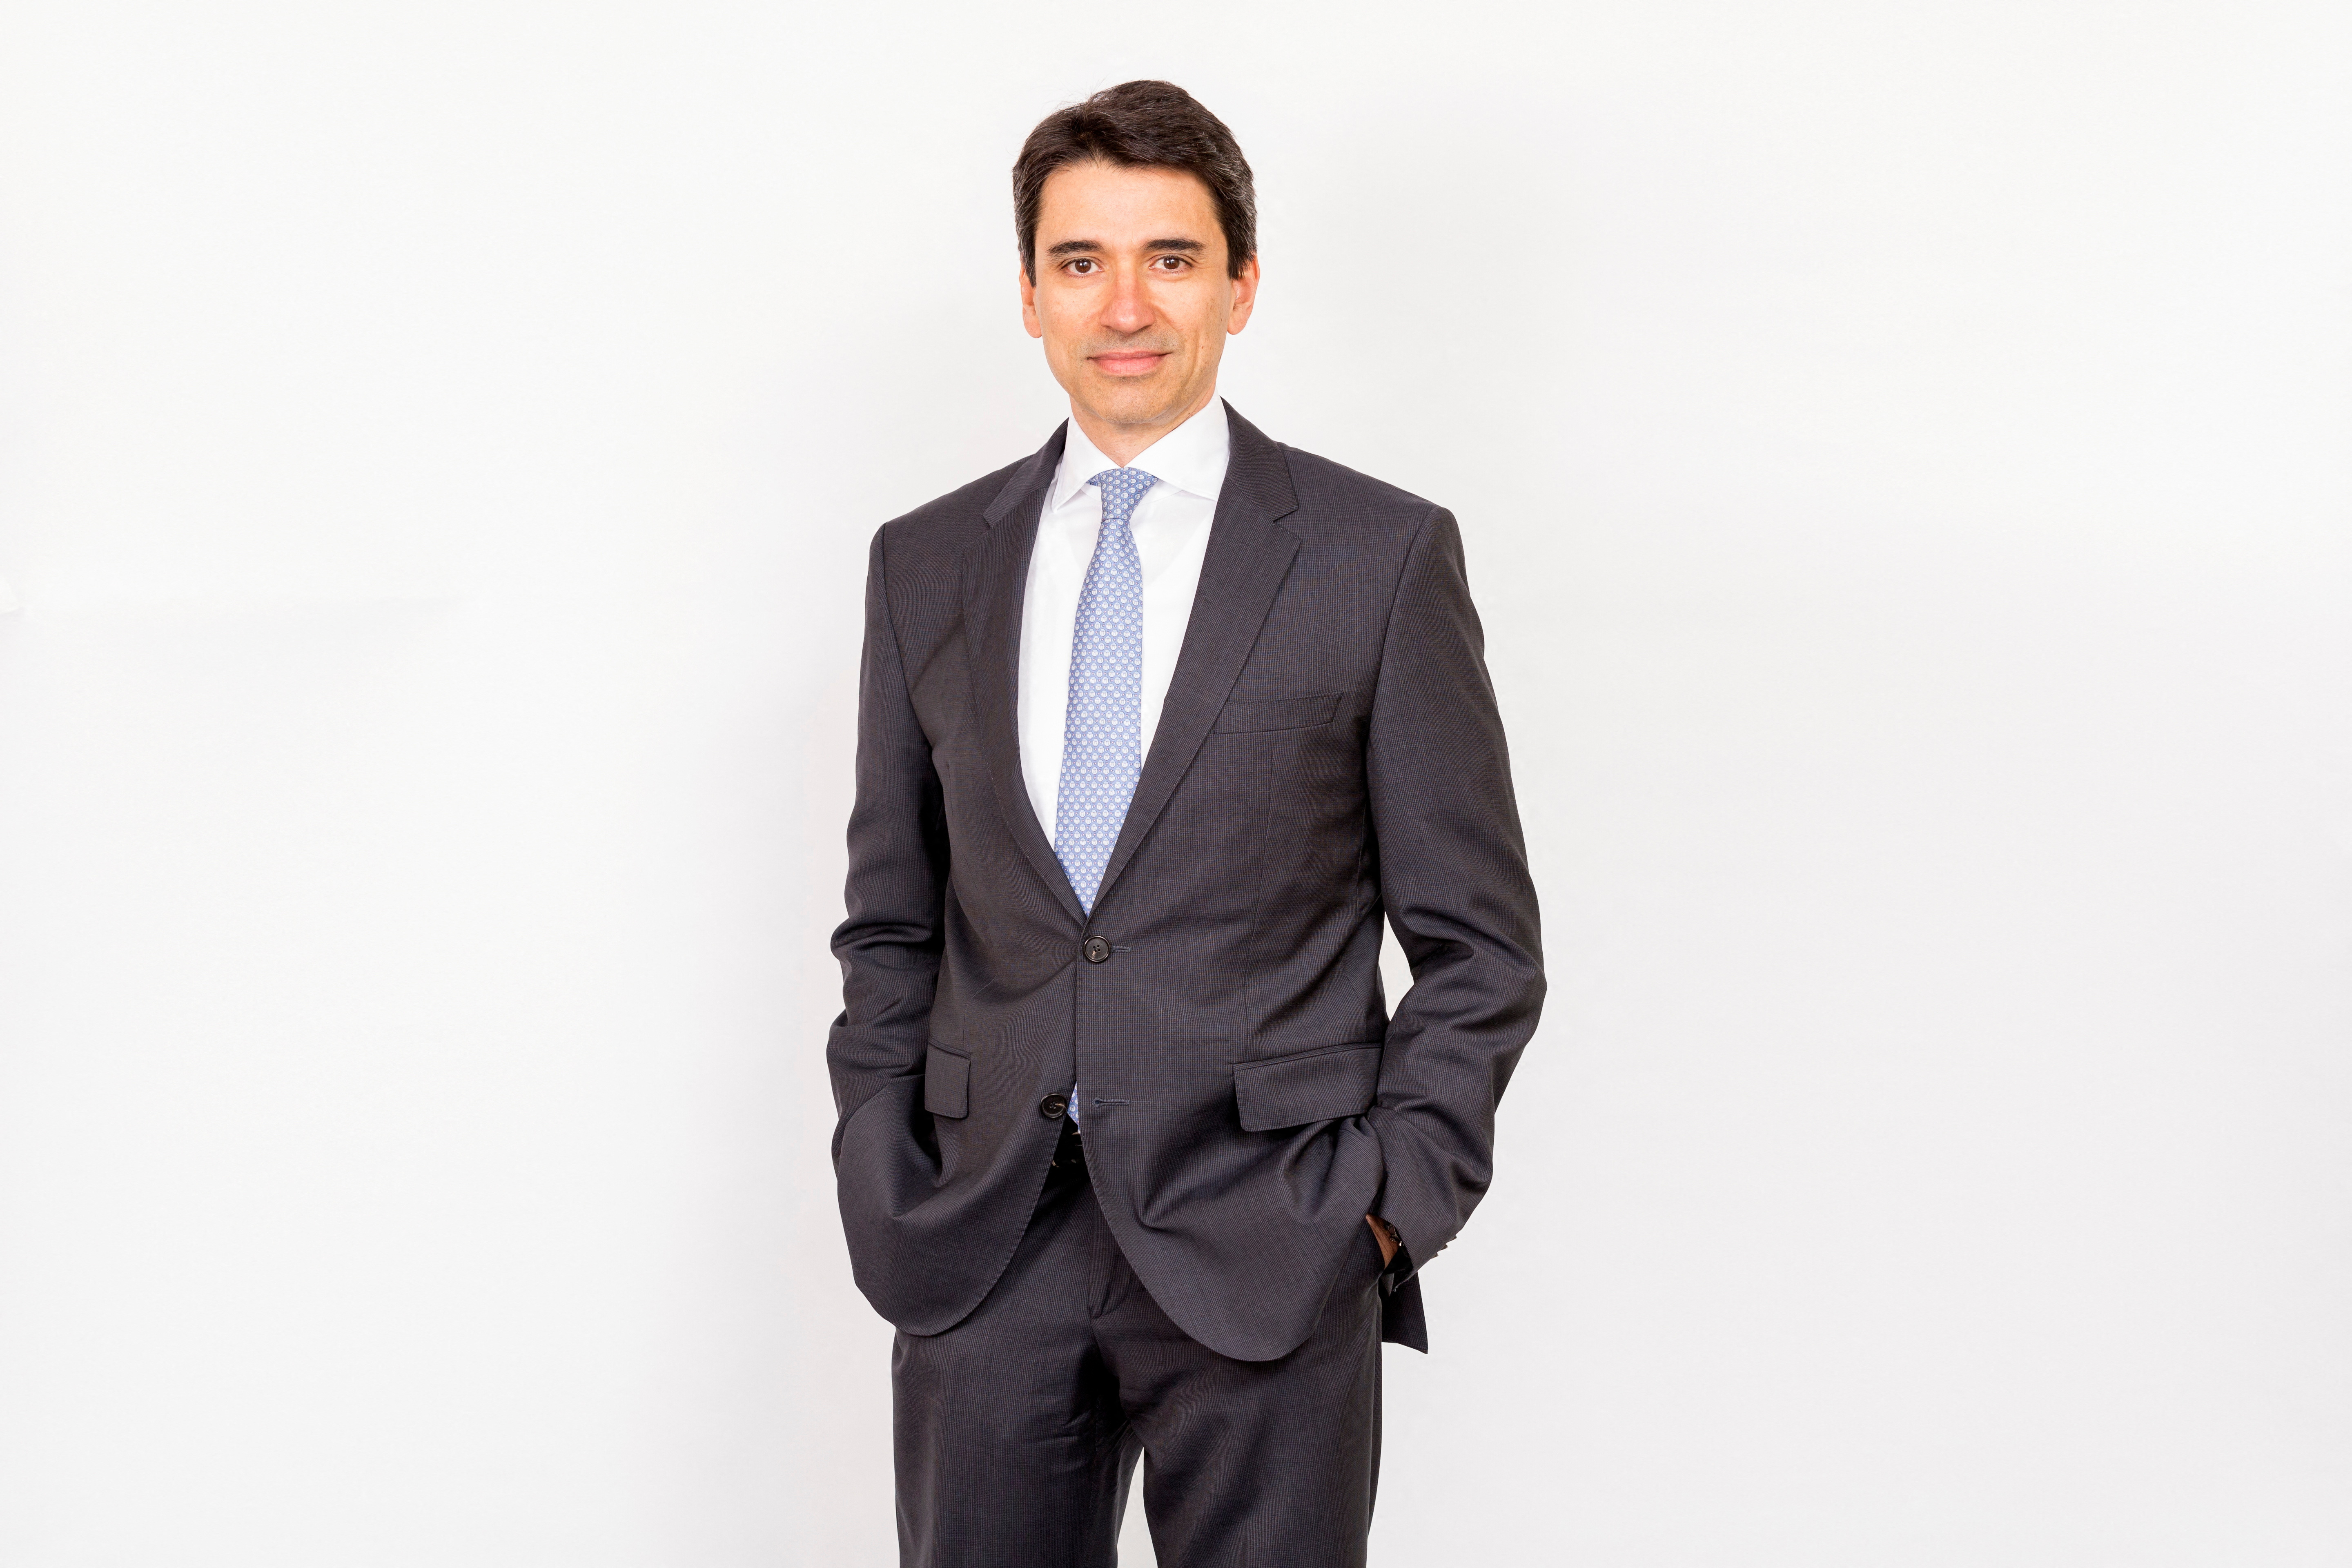 BAT CEO Tadeu Marroco poses in a handout photo